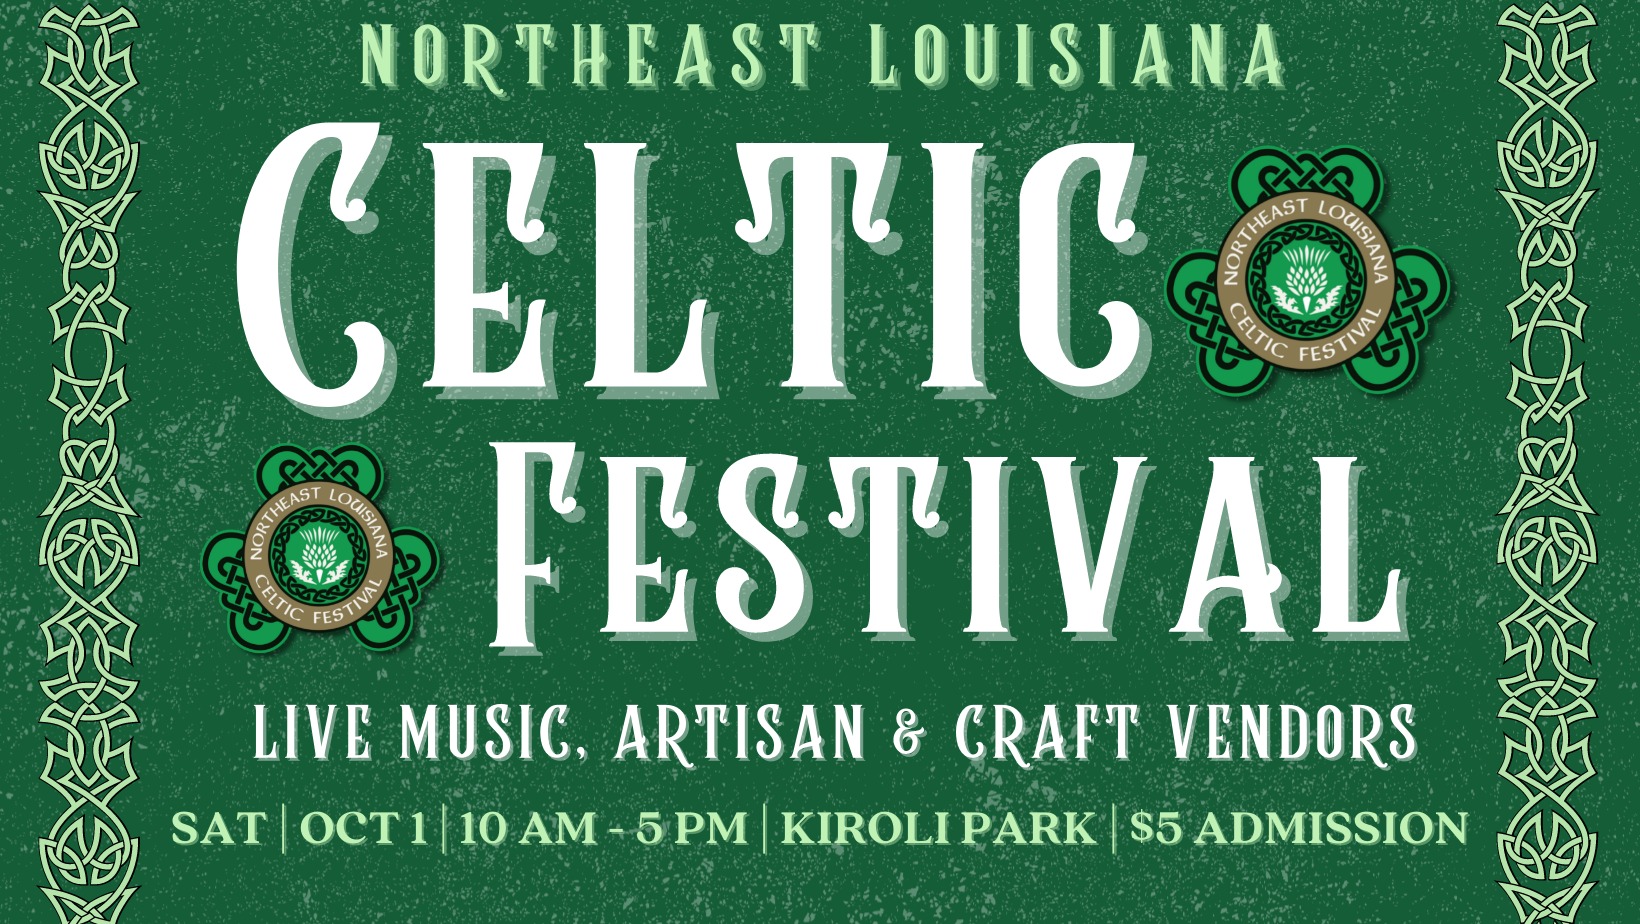 Northeast Louisiana Celtic Festival